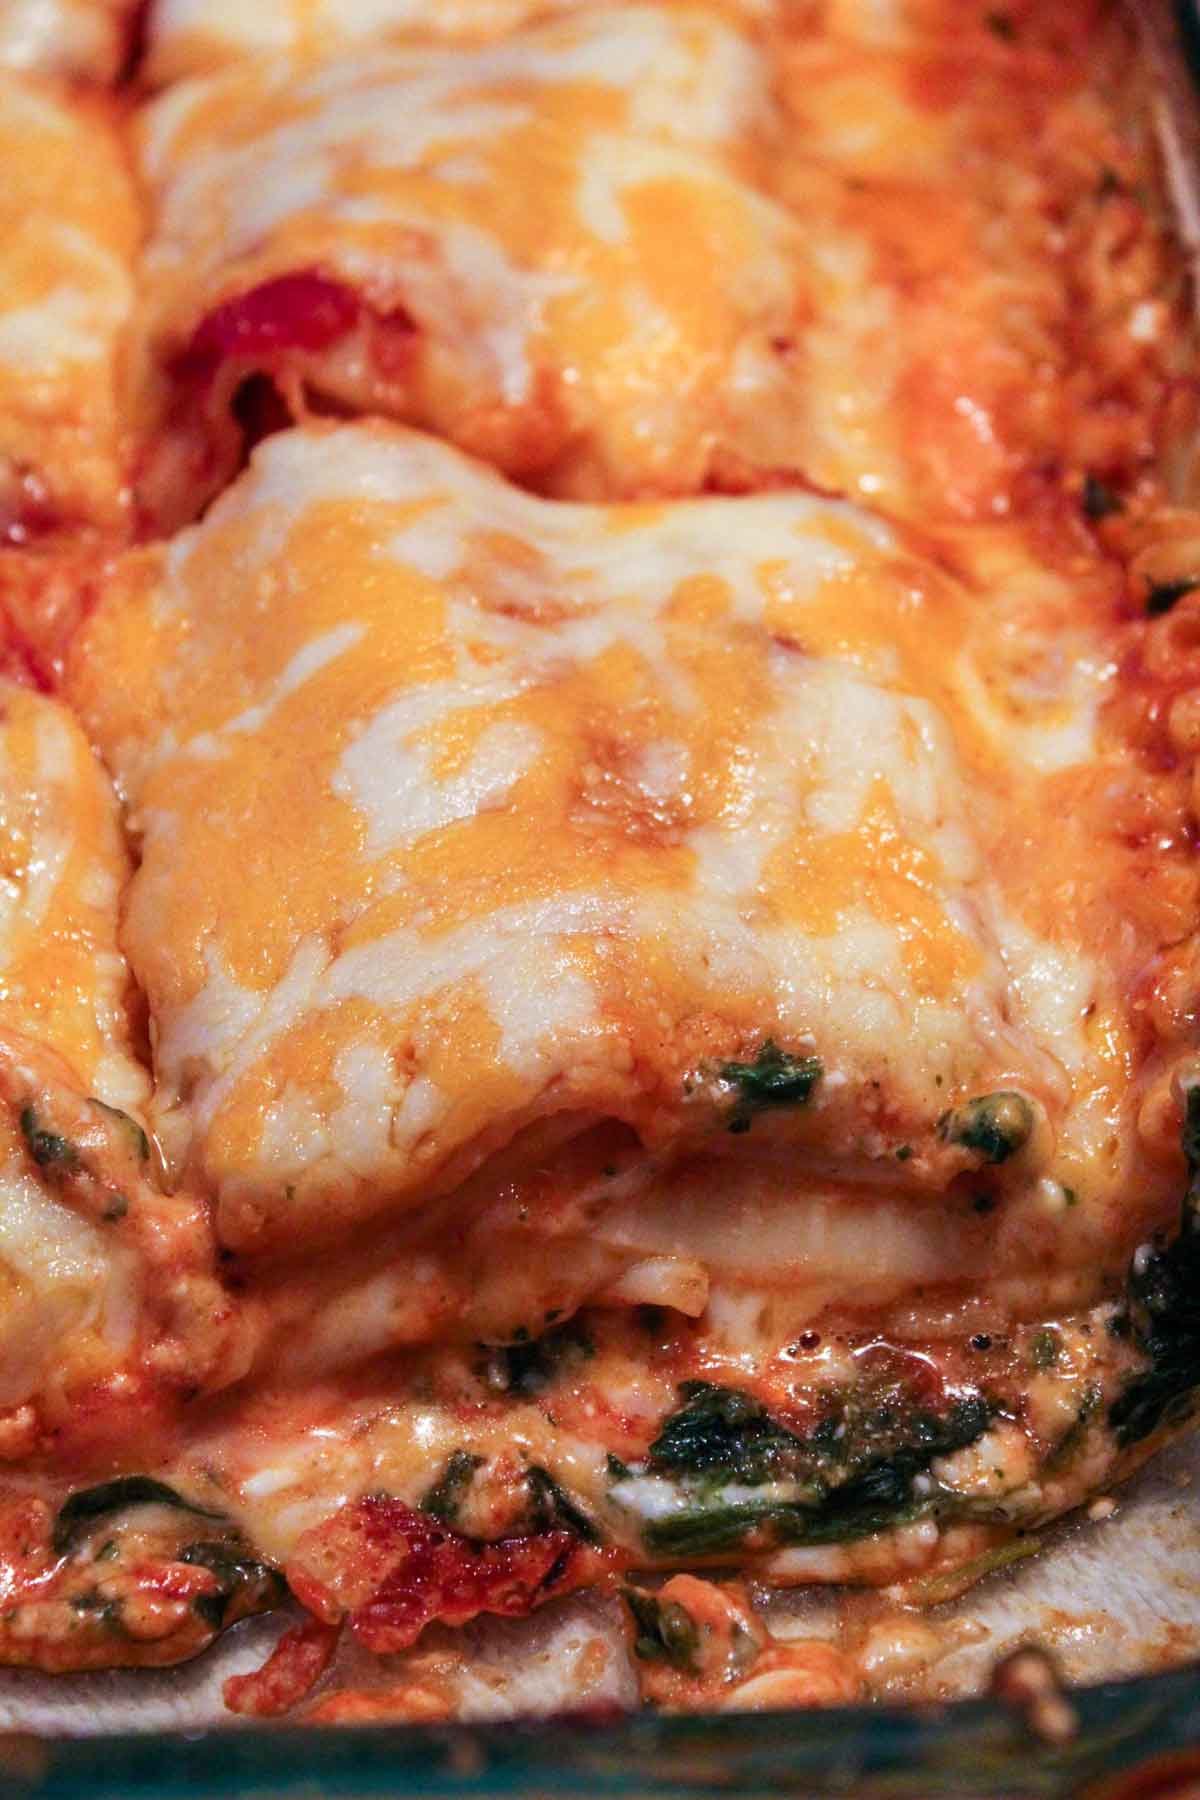 Easy Homemade Lasagna